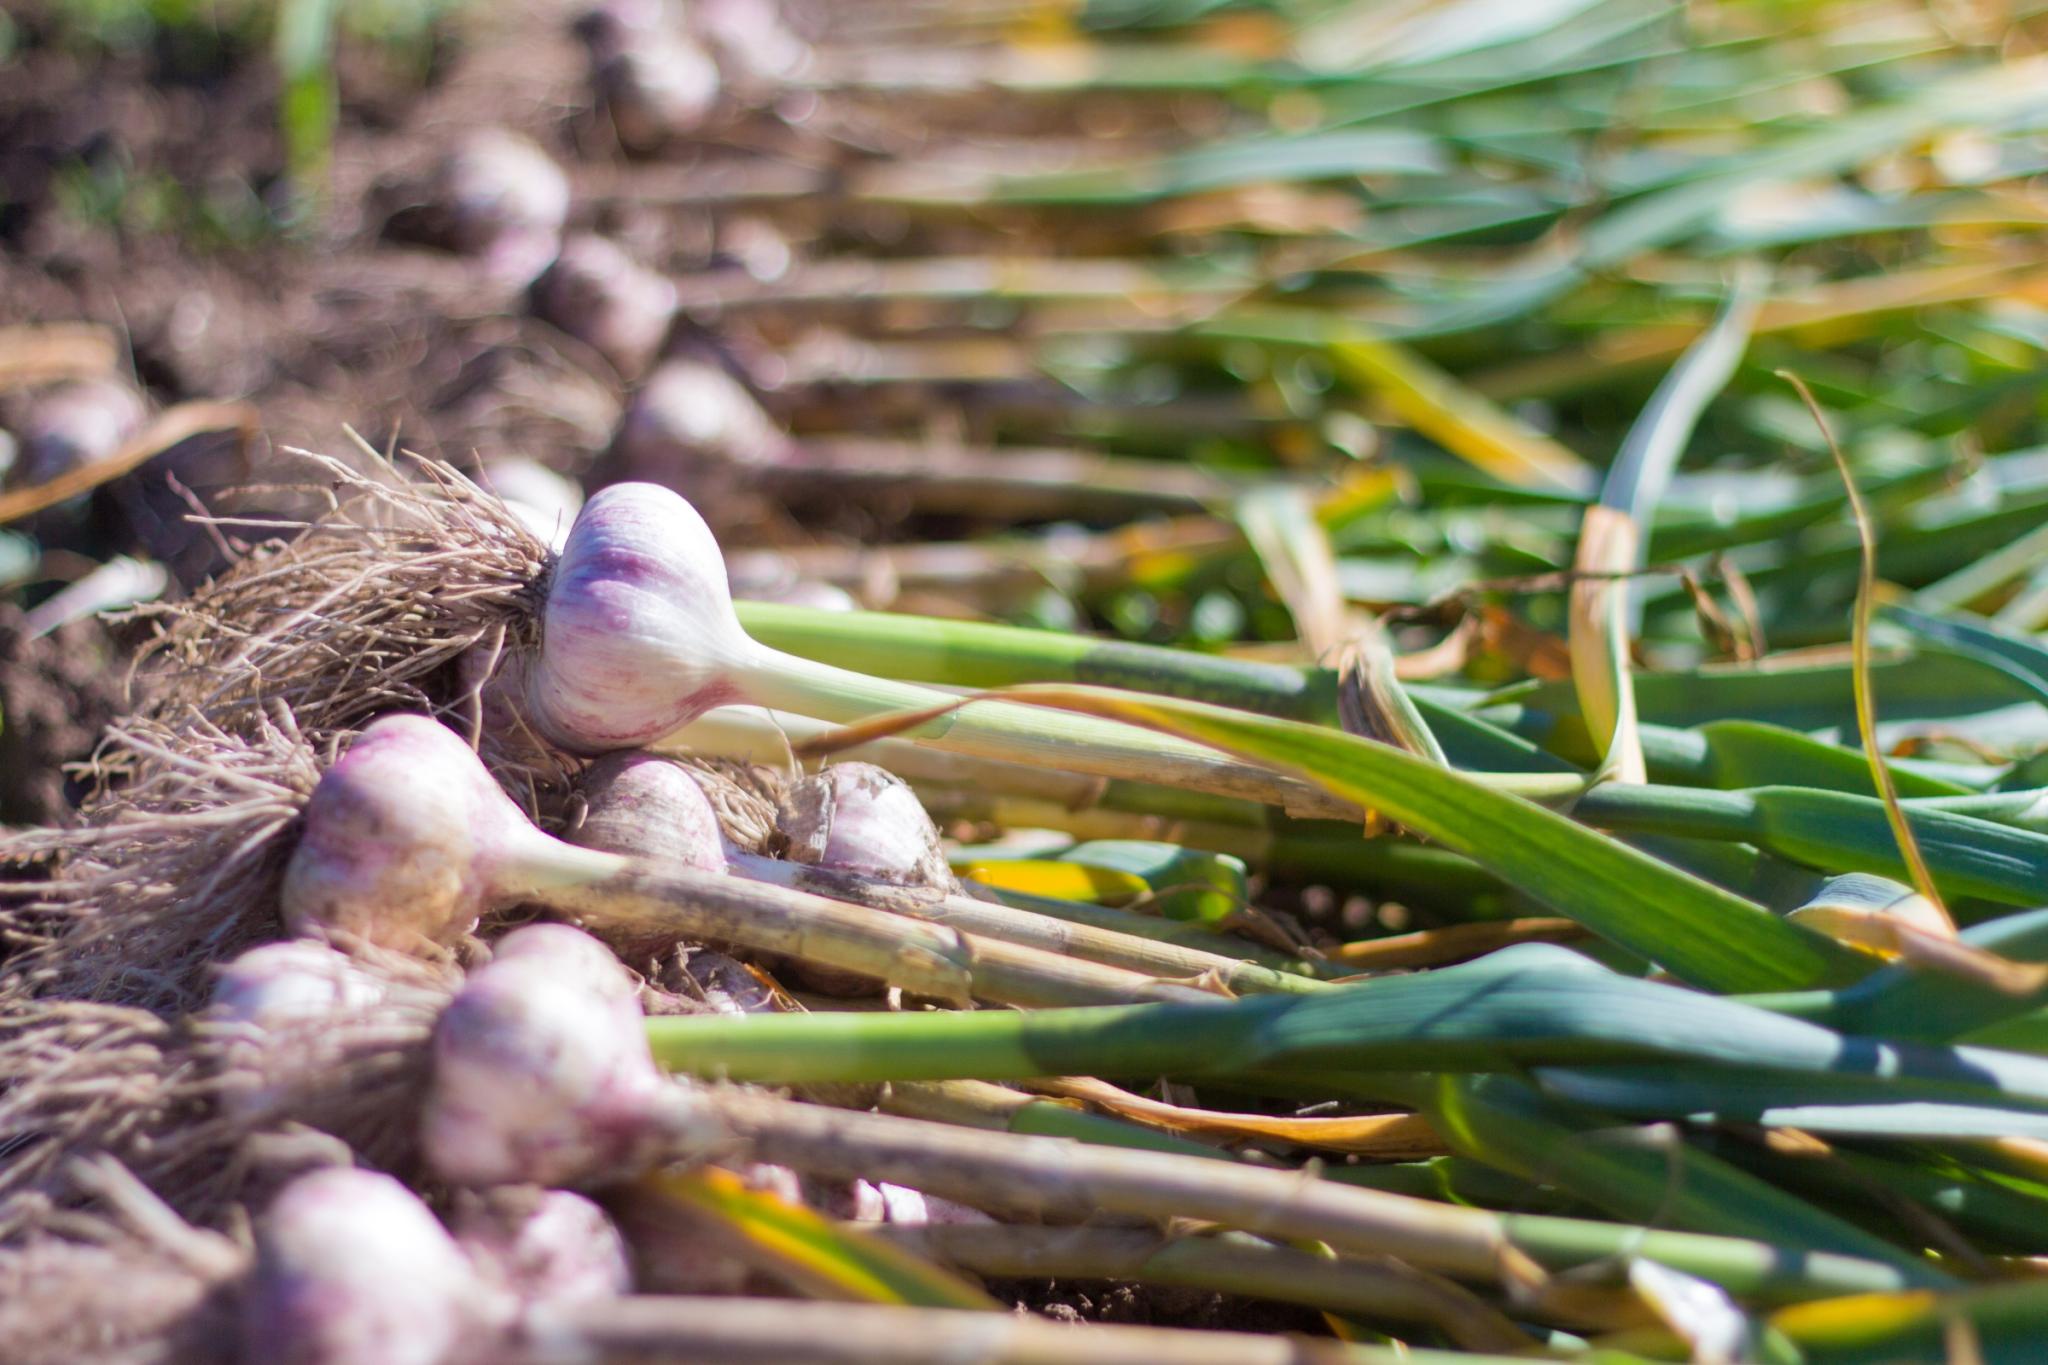 Harvested garlic bulbs. Photo by Nikolaeva Elena/Getty Images